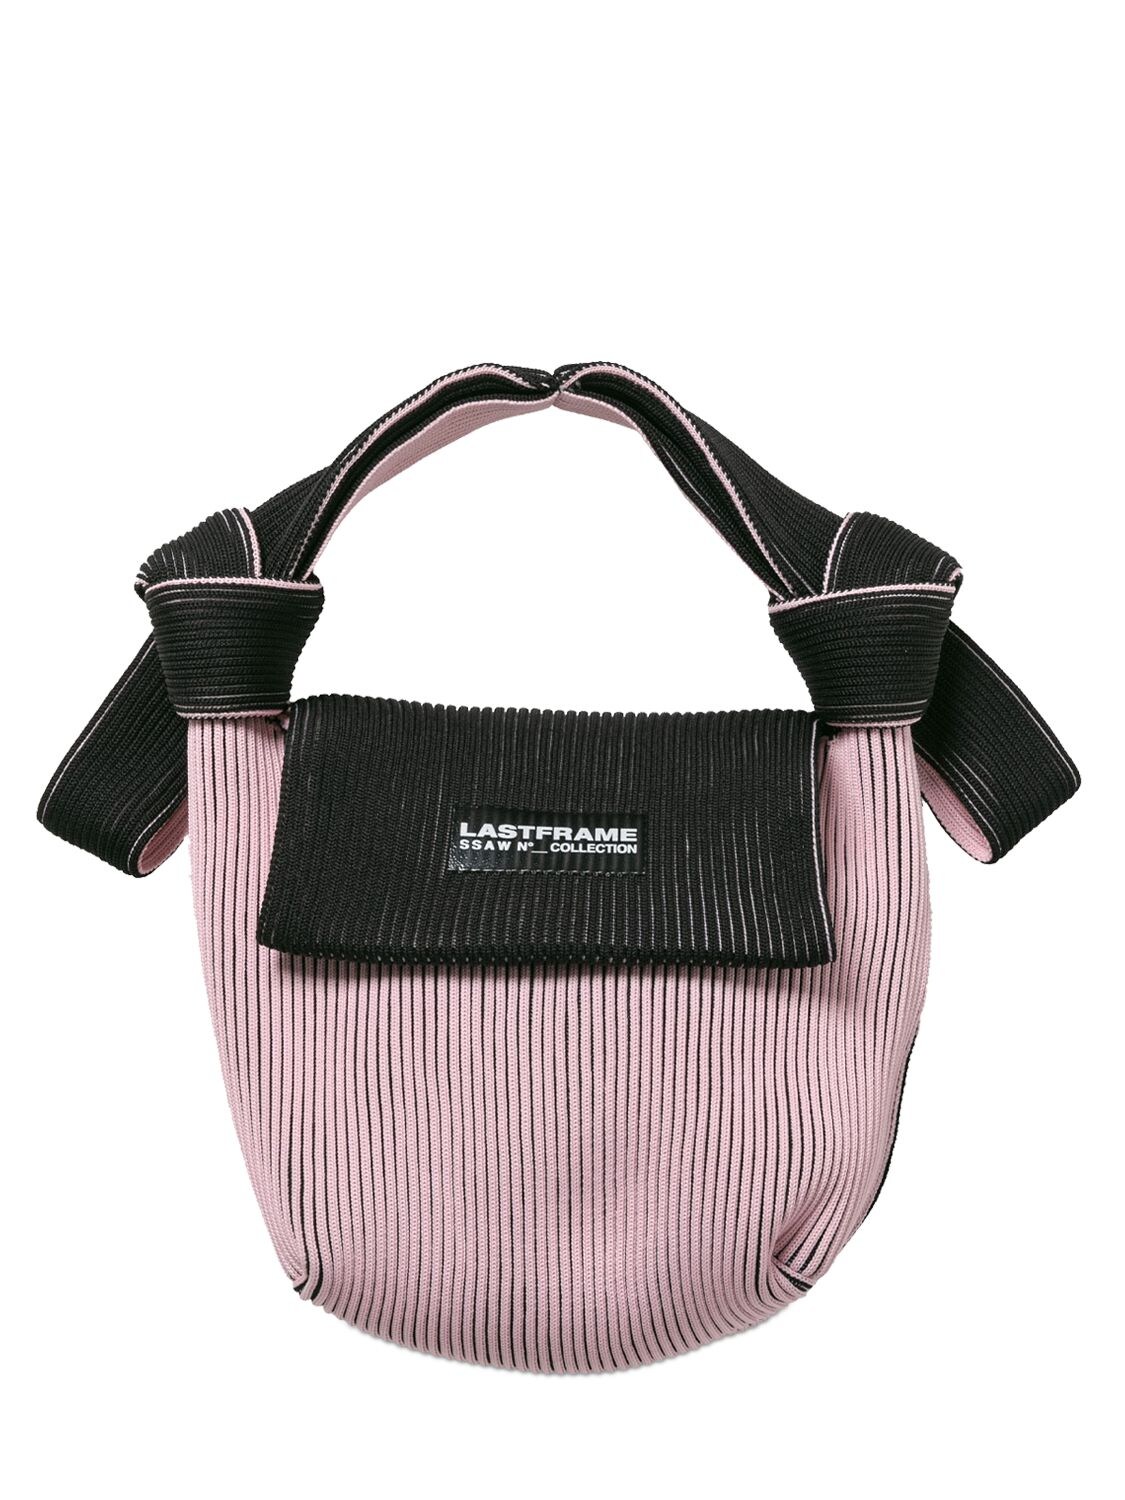 Lastframe Bi-color Obi Bag In Black,light Pink | ModeSens